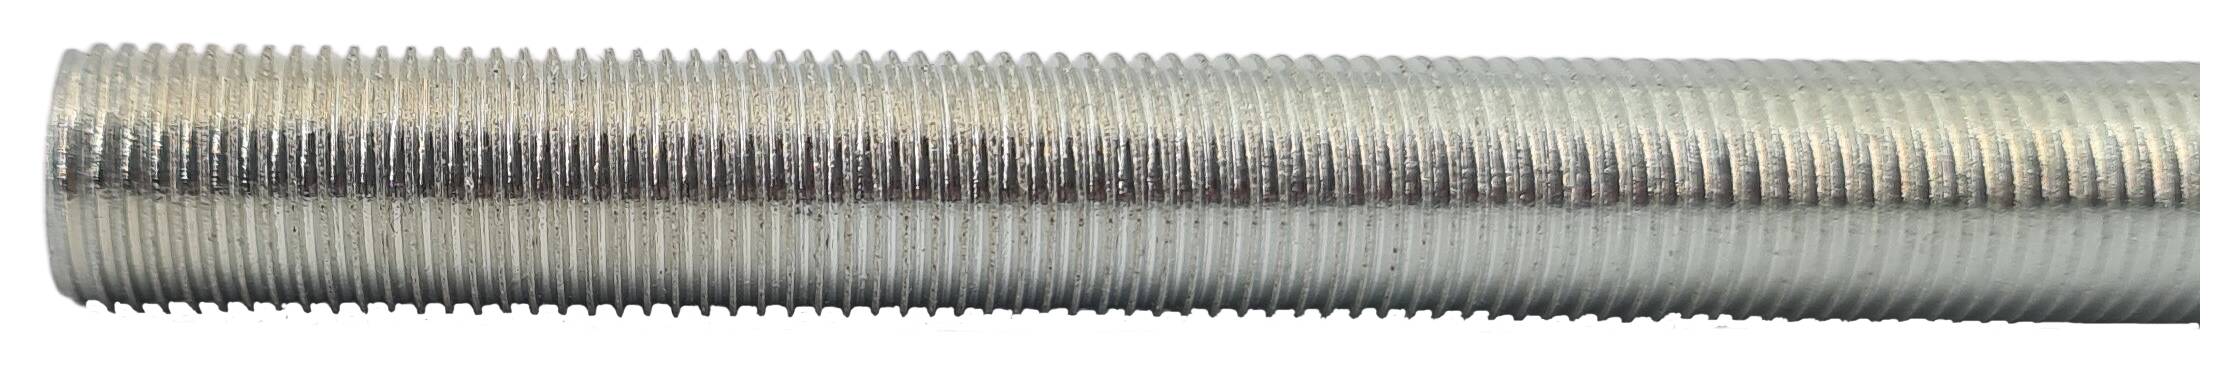 iron thread tube M10x1x380 round zinc